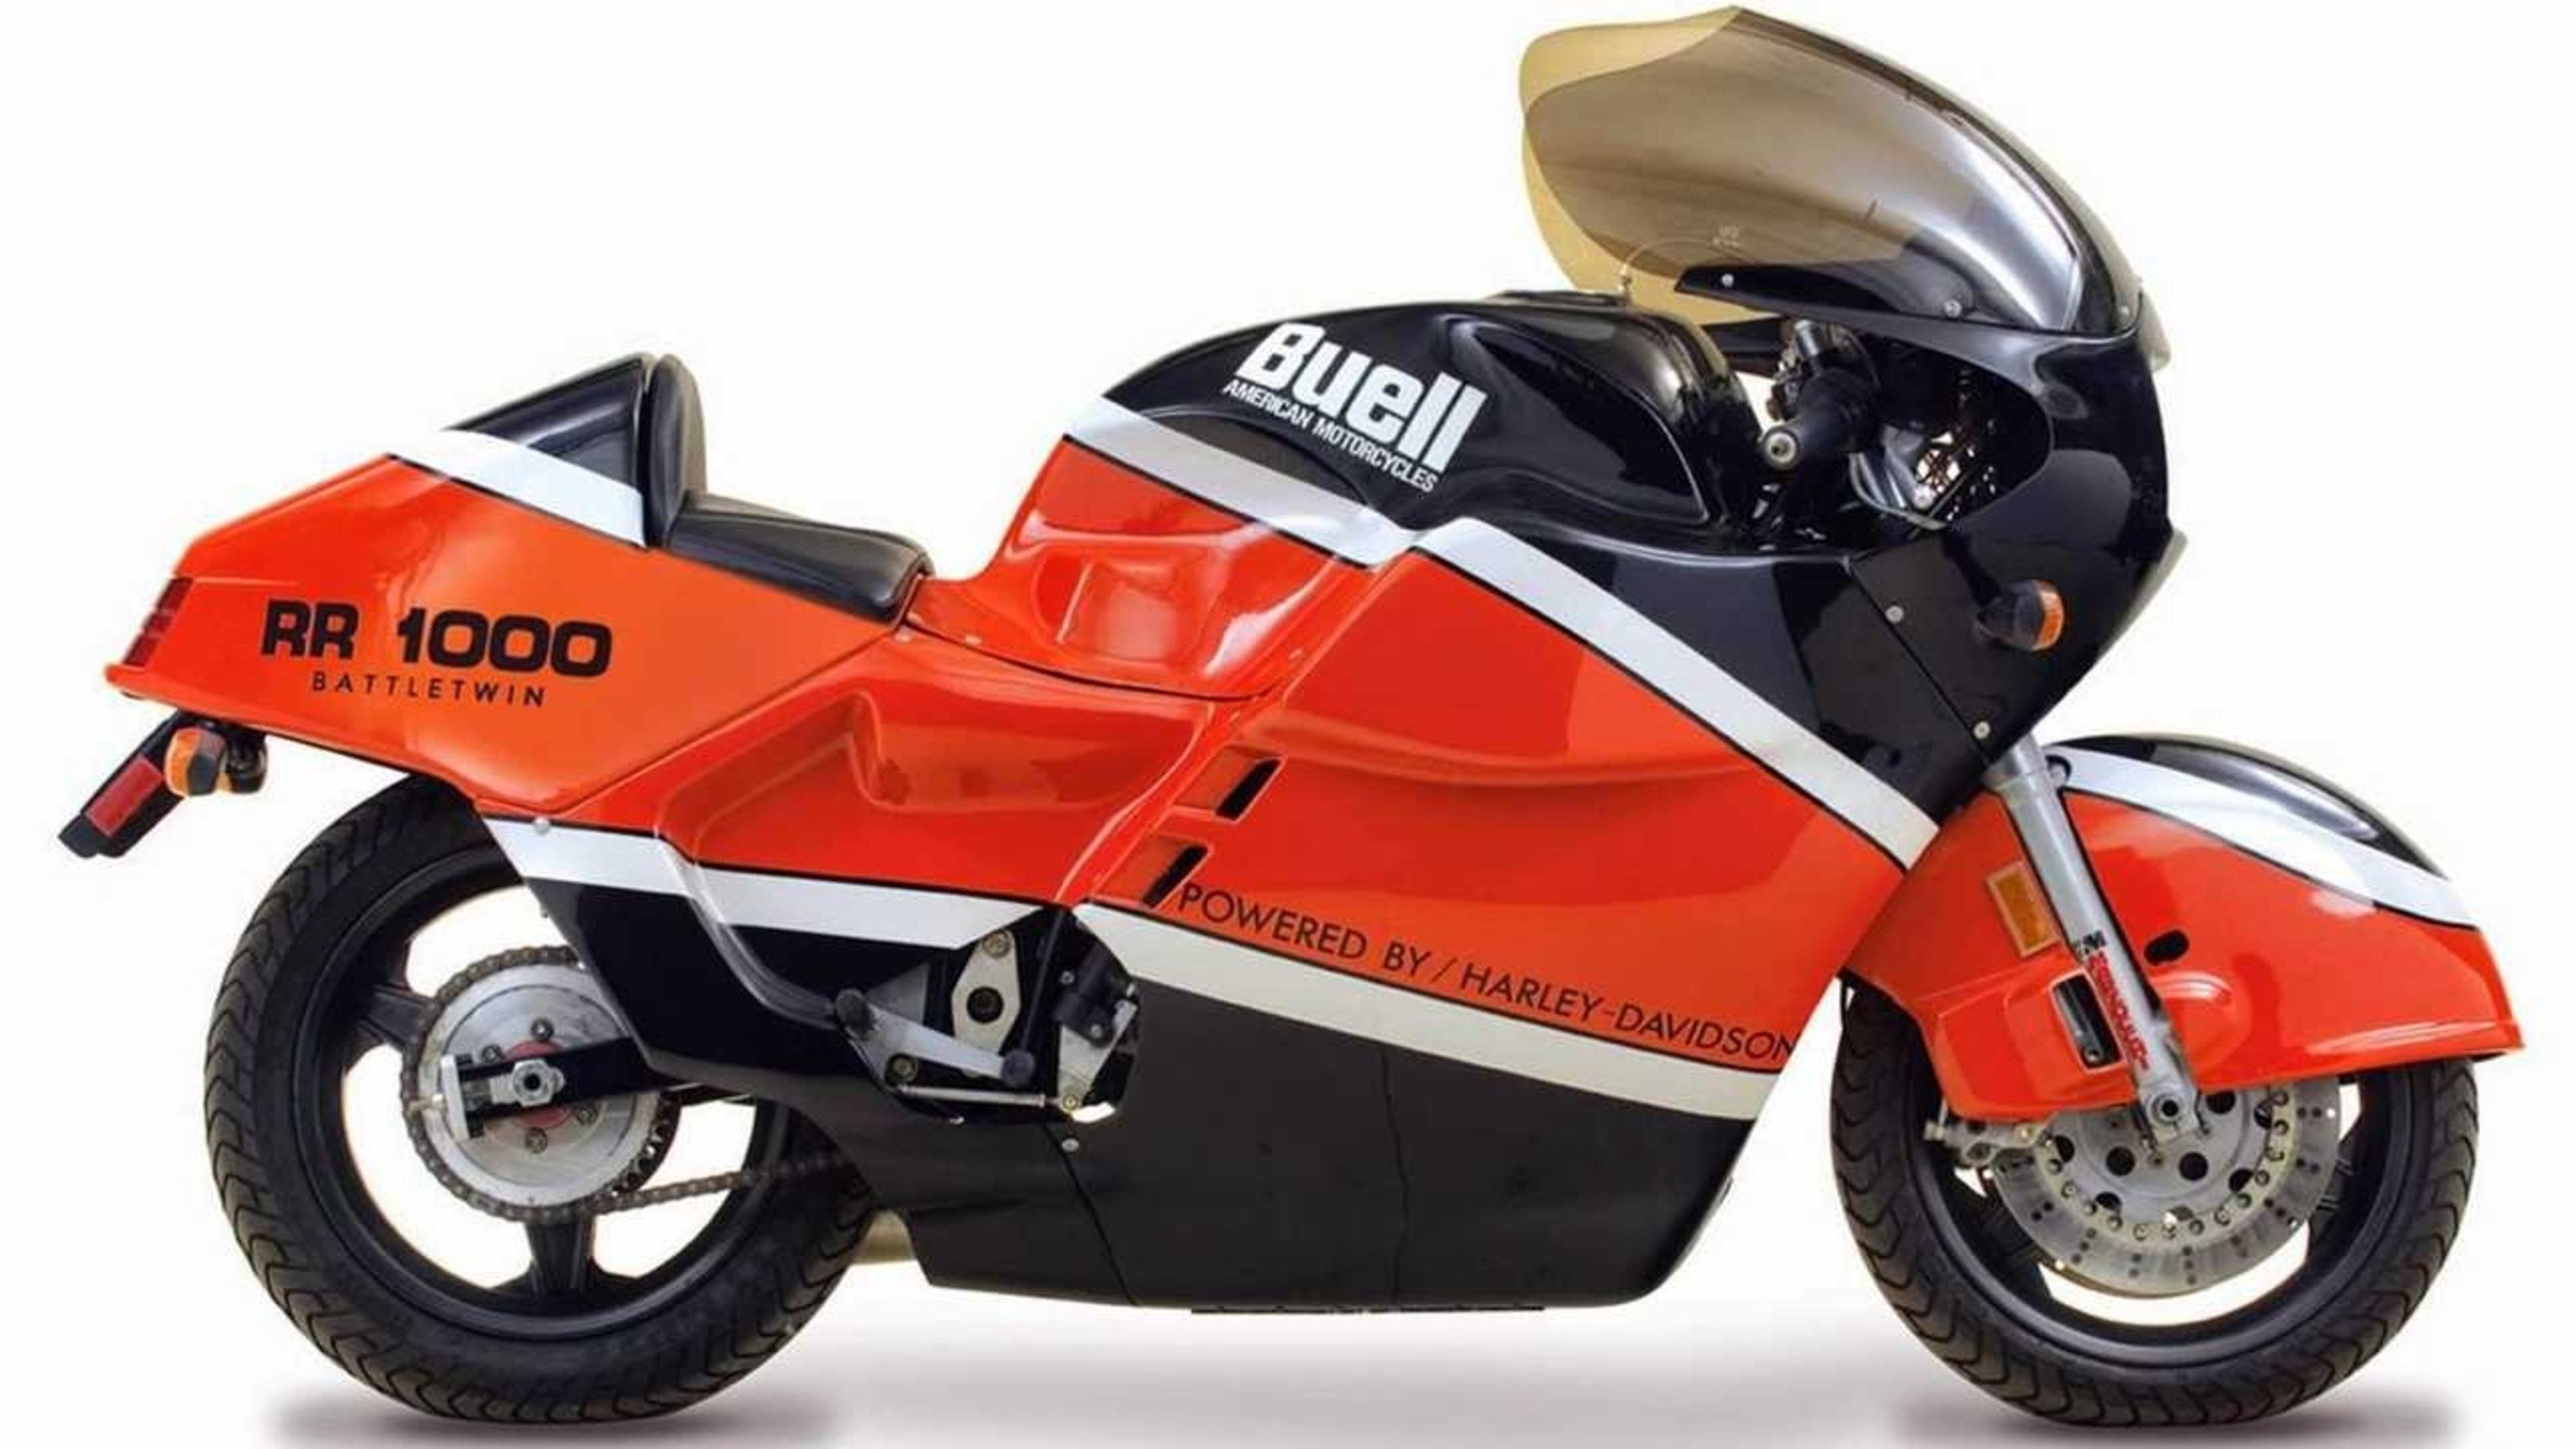 Buell RR 1000 RR 1000 Battletwin (1986 - 88)